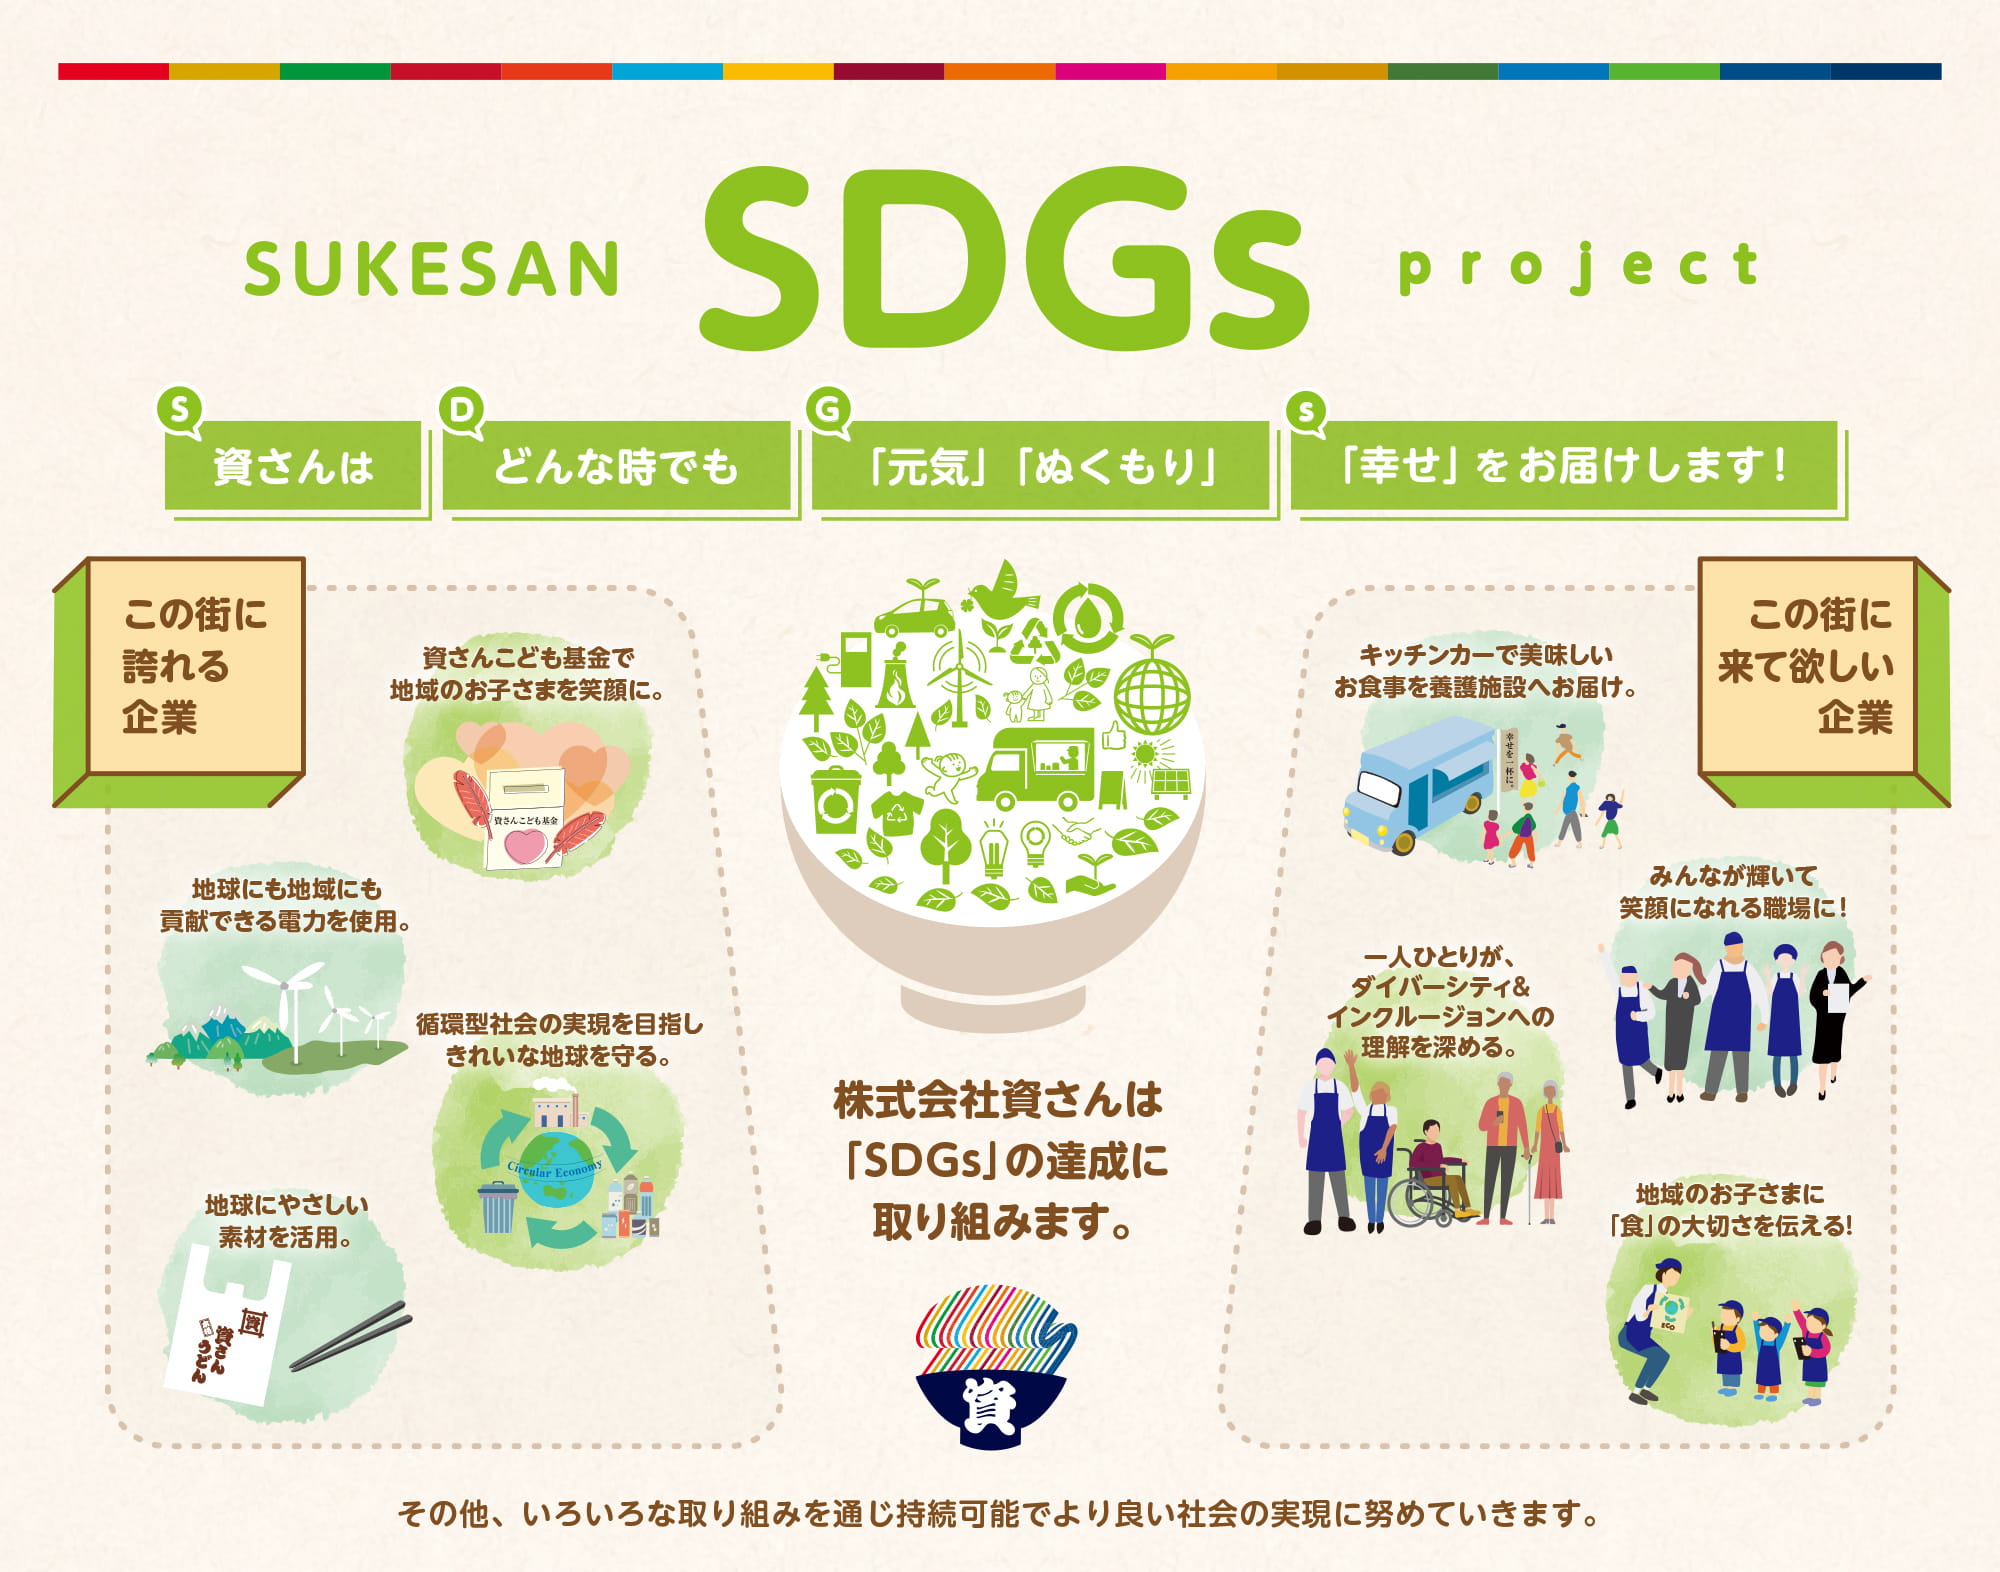 SUKESAN SDGs project